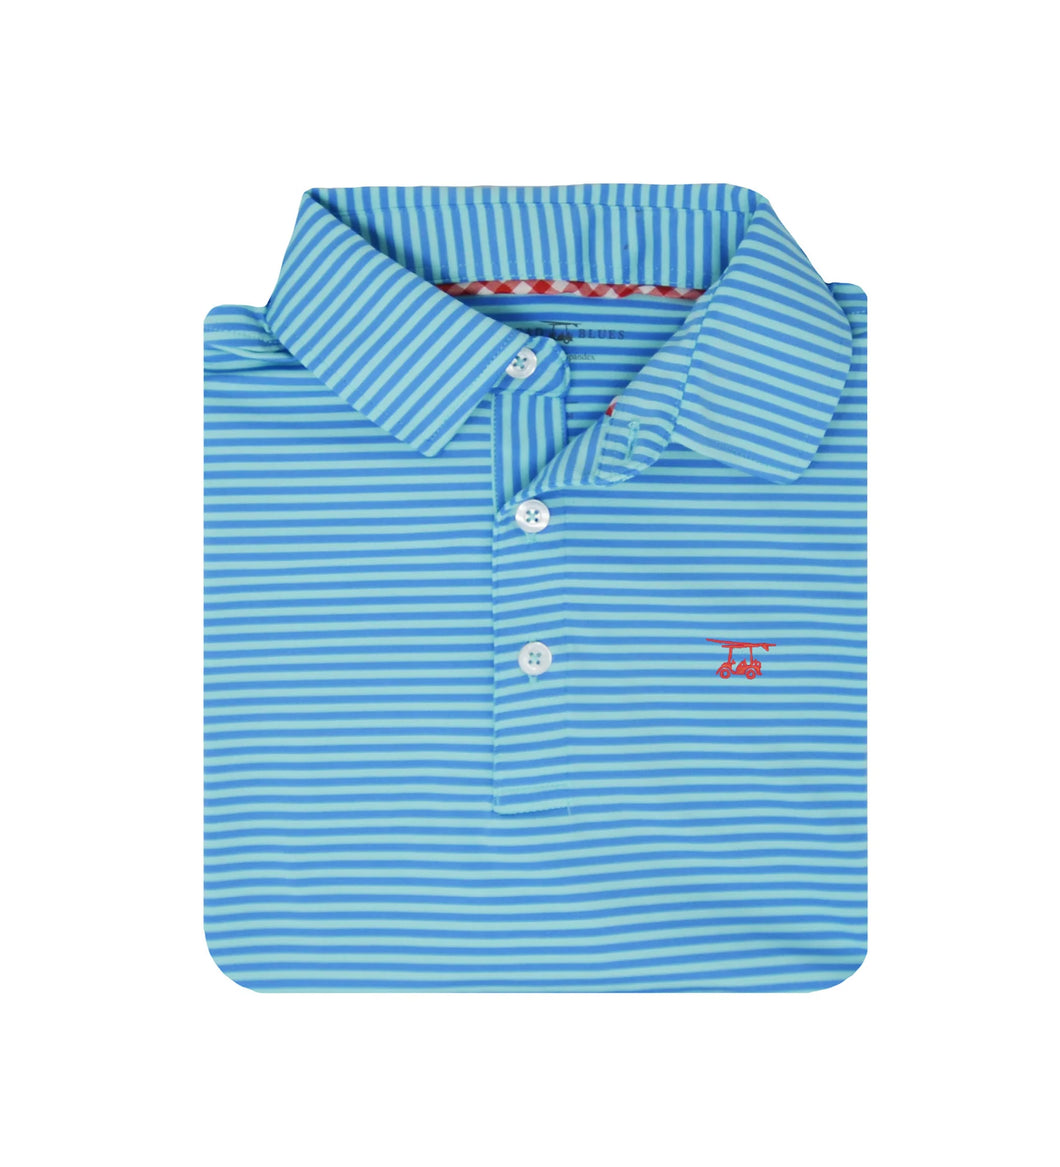 Bald Head Blues Golf Shirt - Aruba/Regatta Blue Stripe